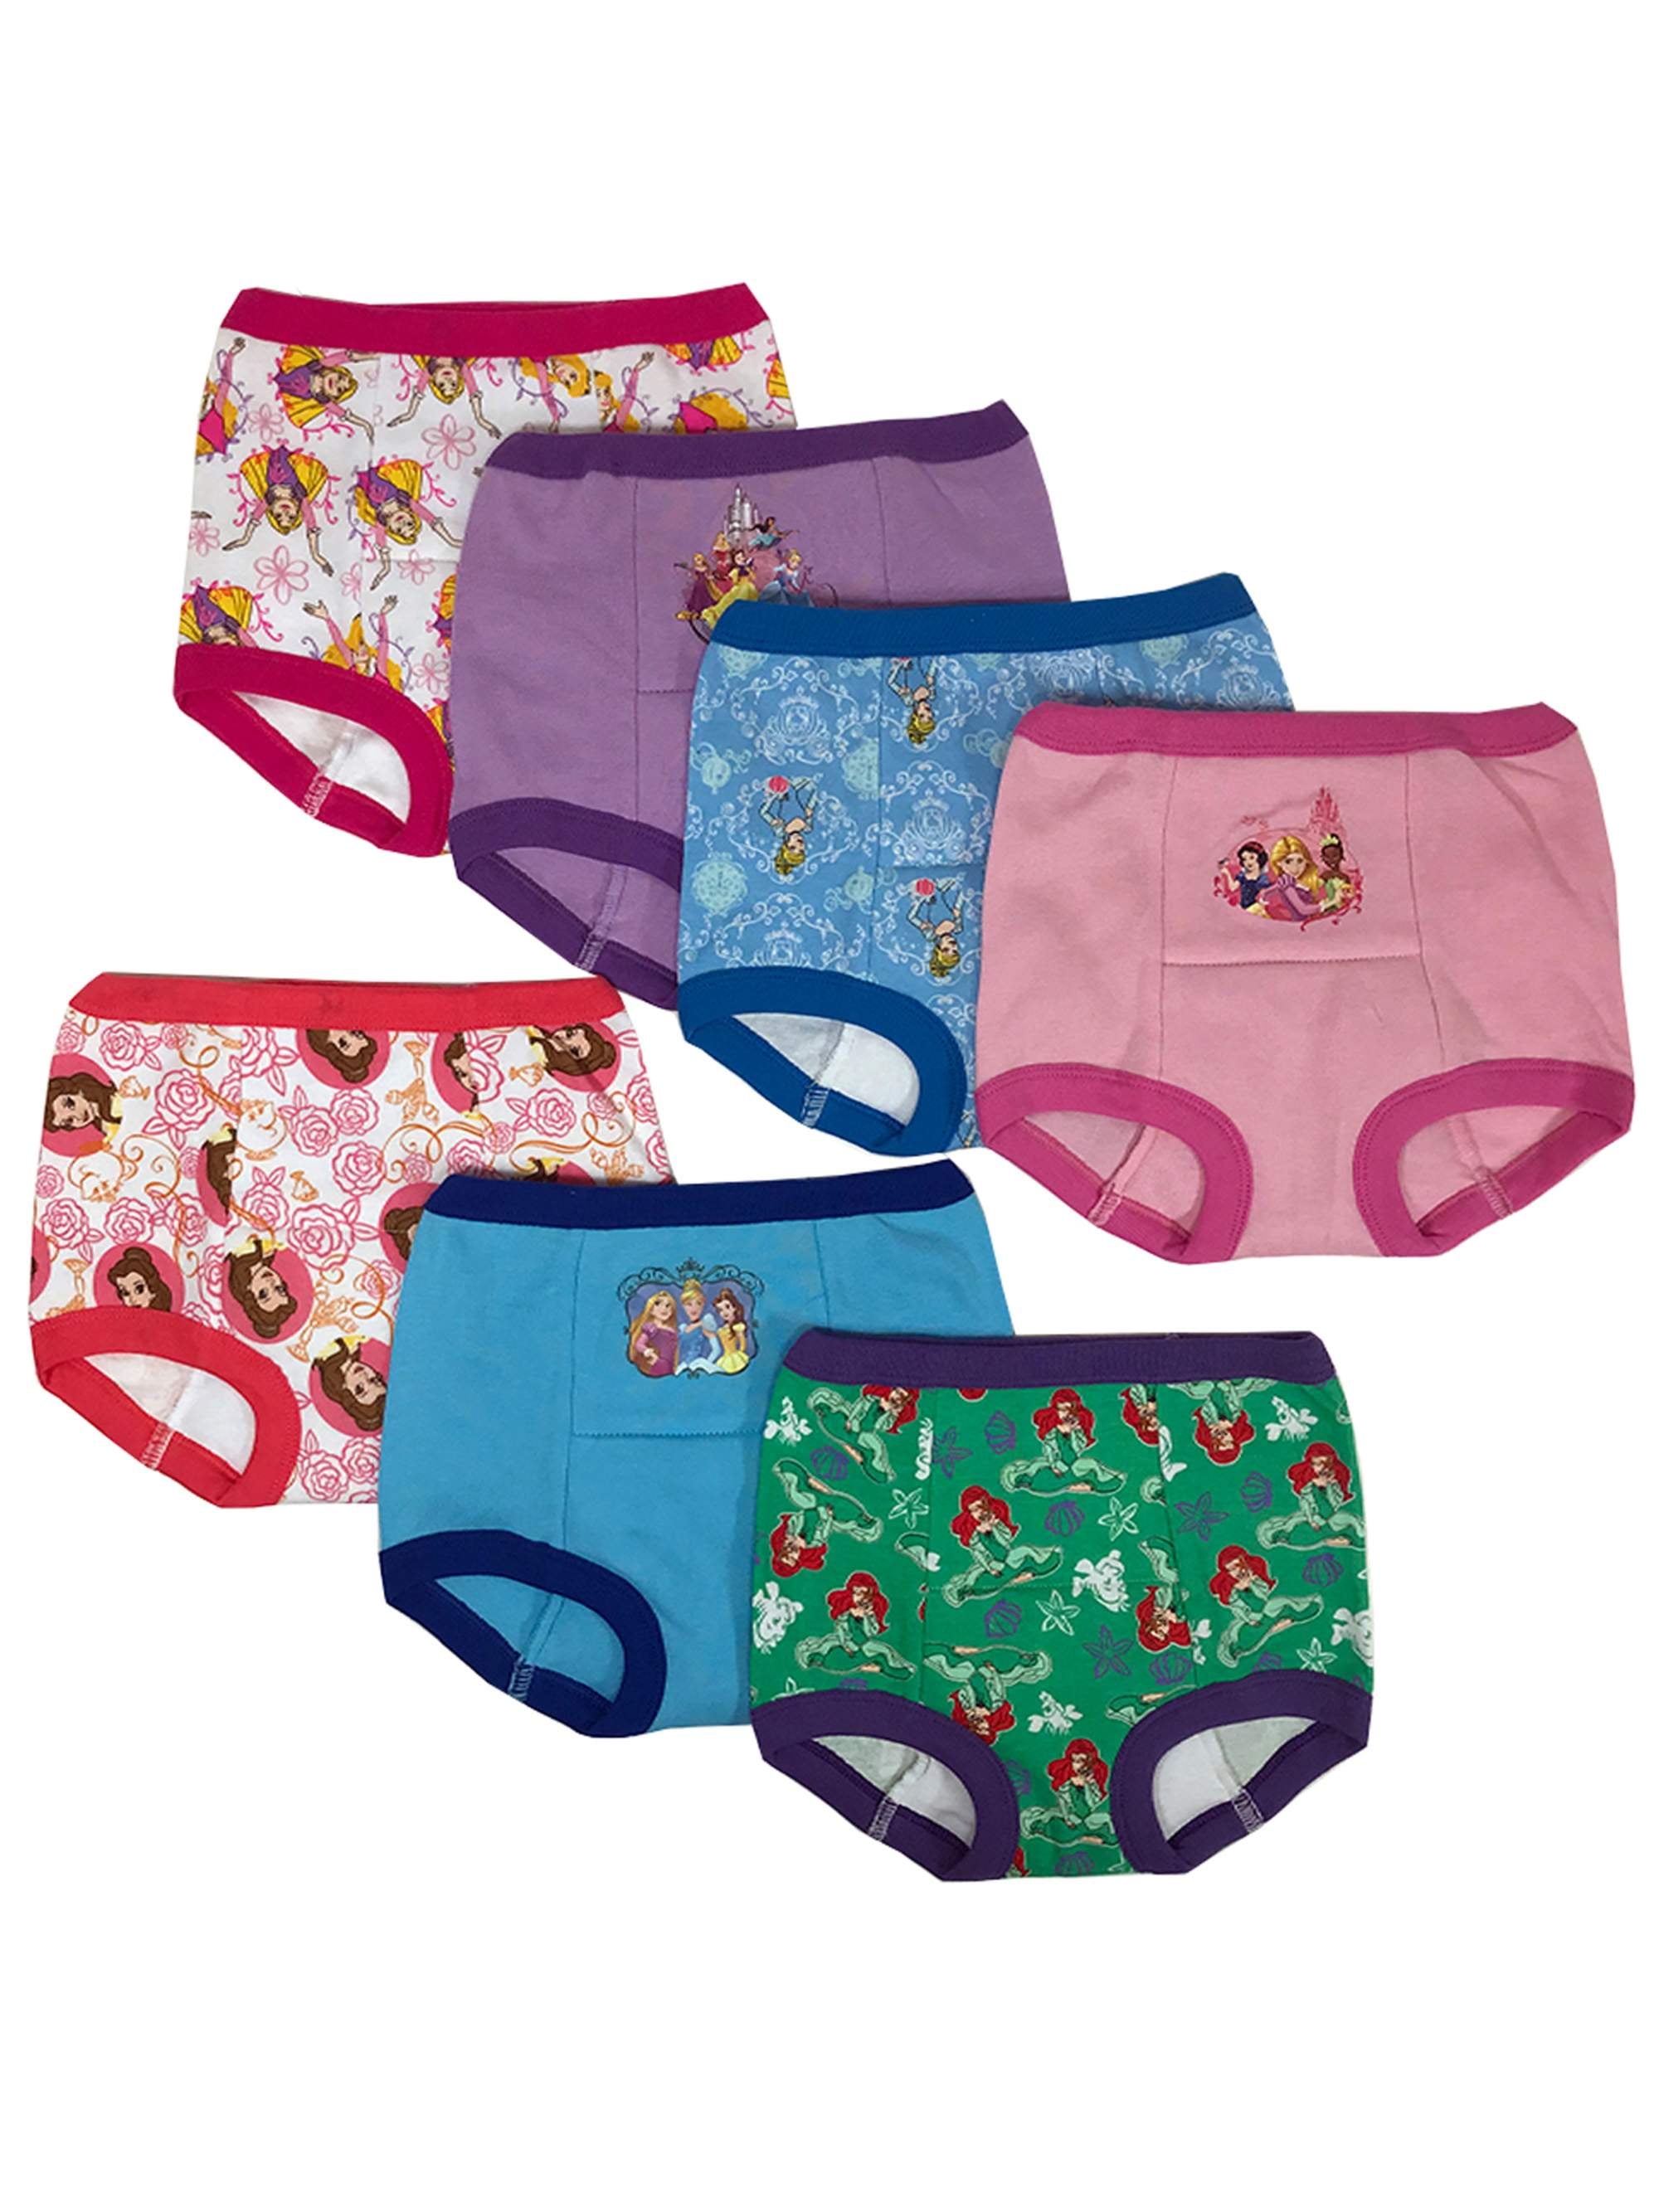 Disney Princess Toddler Girl Training Underwear, 7-Pack, Sizes 2T